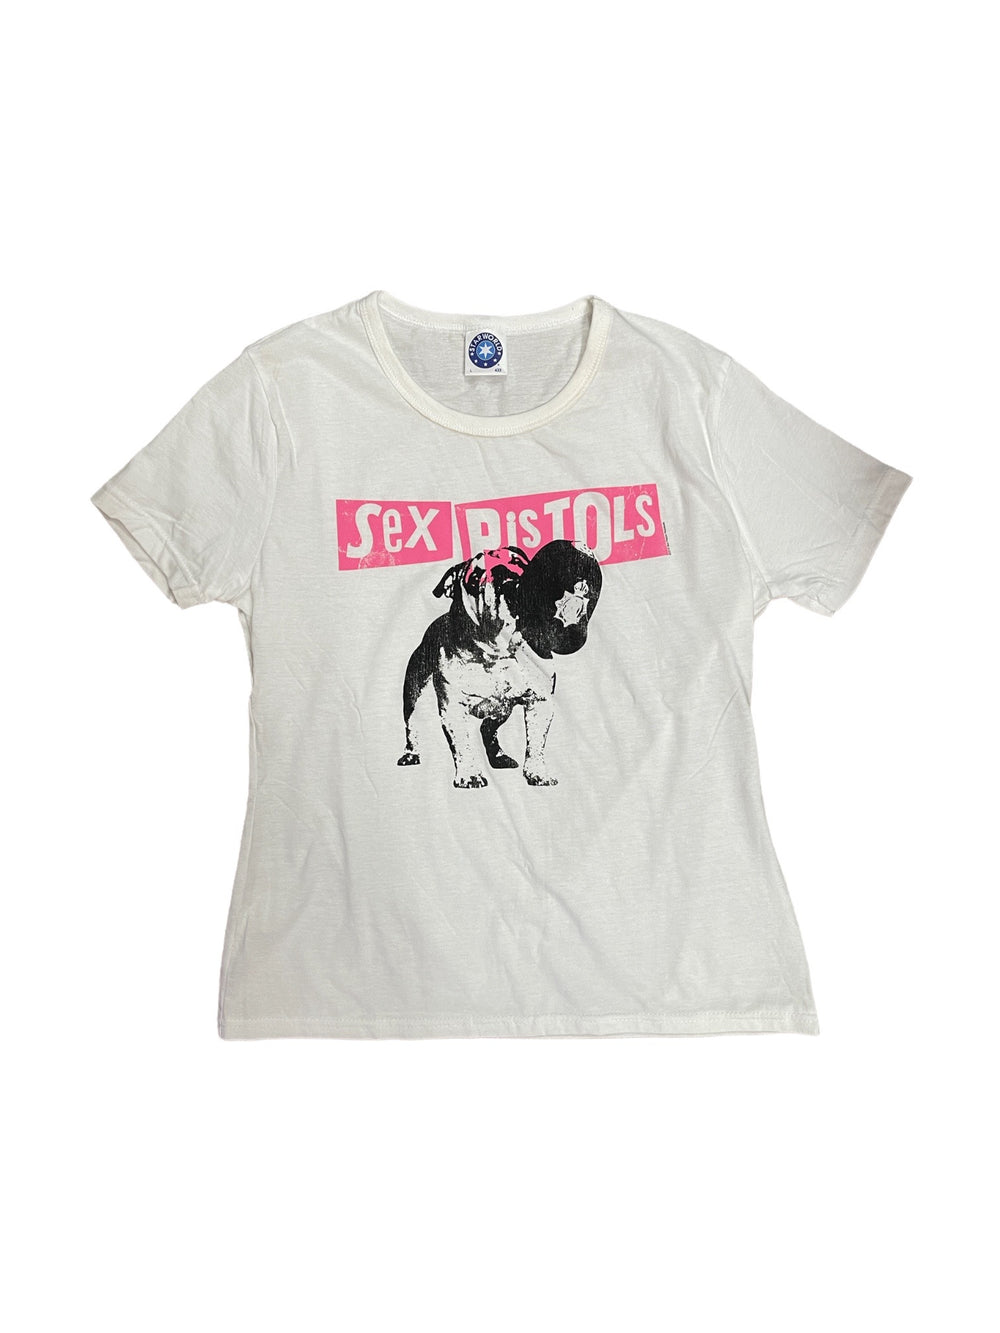 Sex Pistols BULL DOG White Ladies Official T-Shirt Brand New Various Sizes